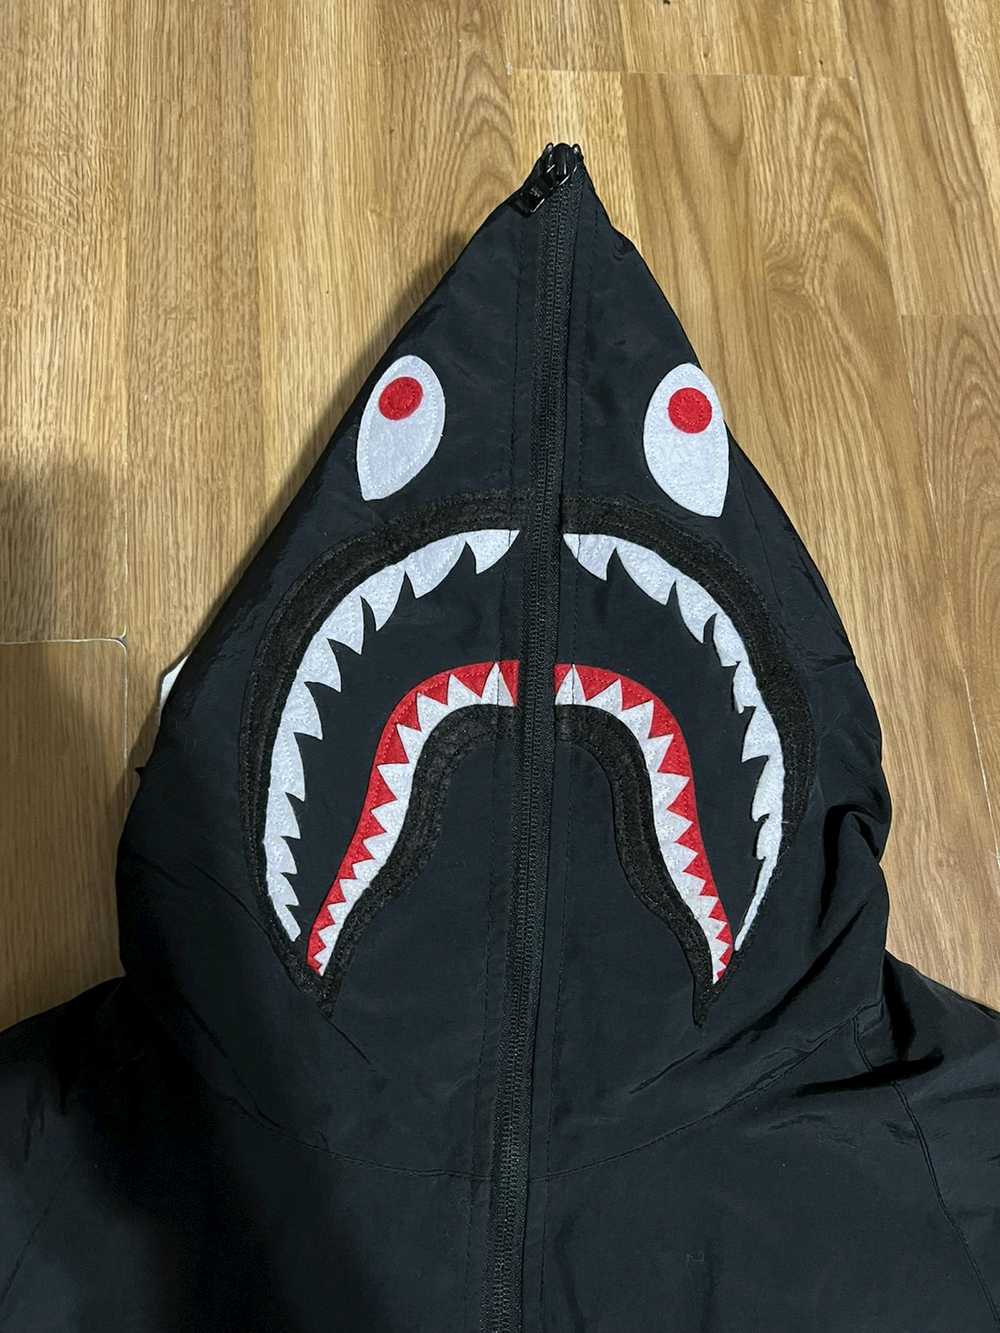 Bape Shark Down Hoodie Jacket - image 3